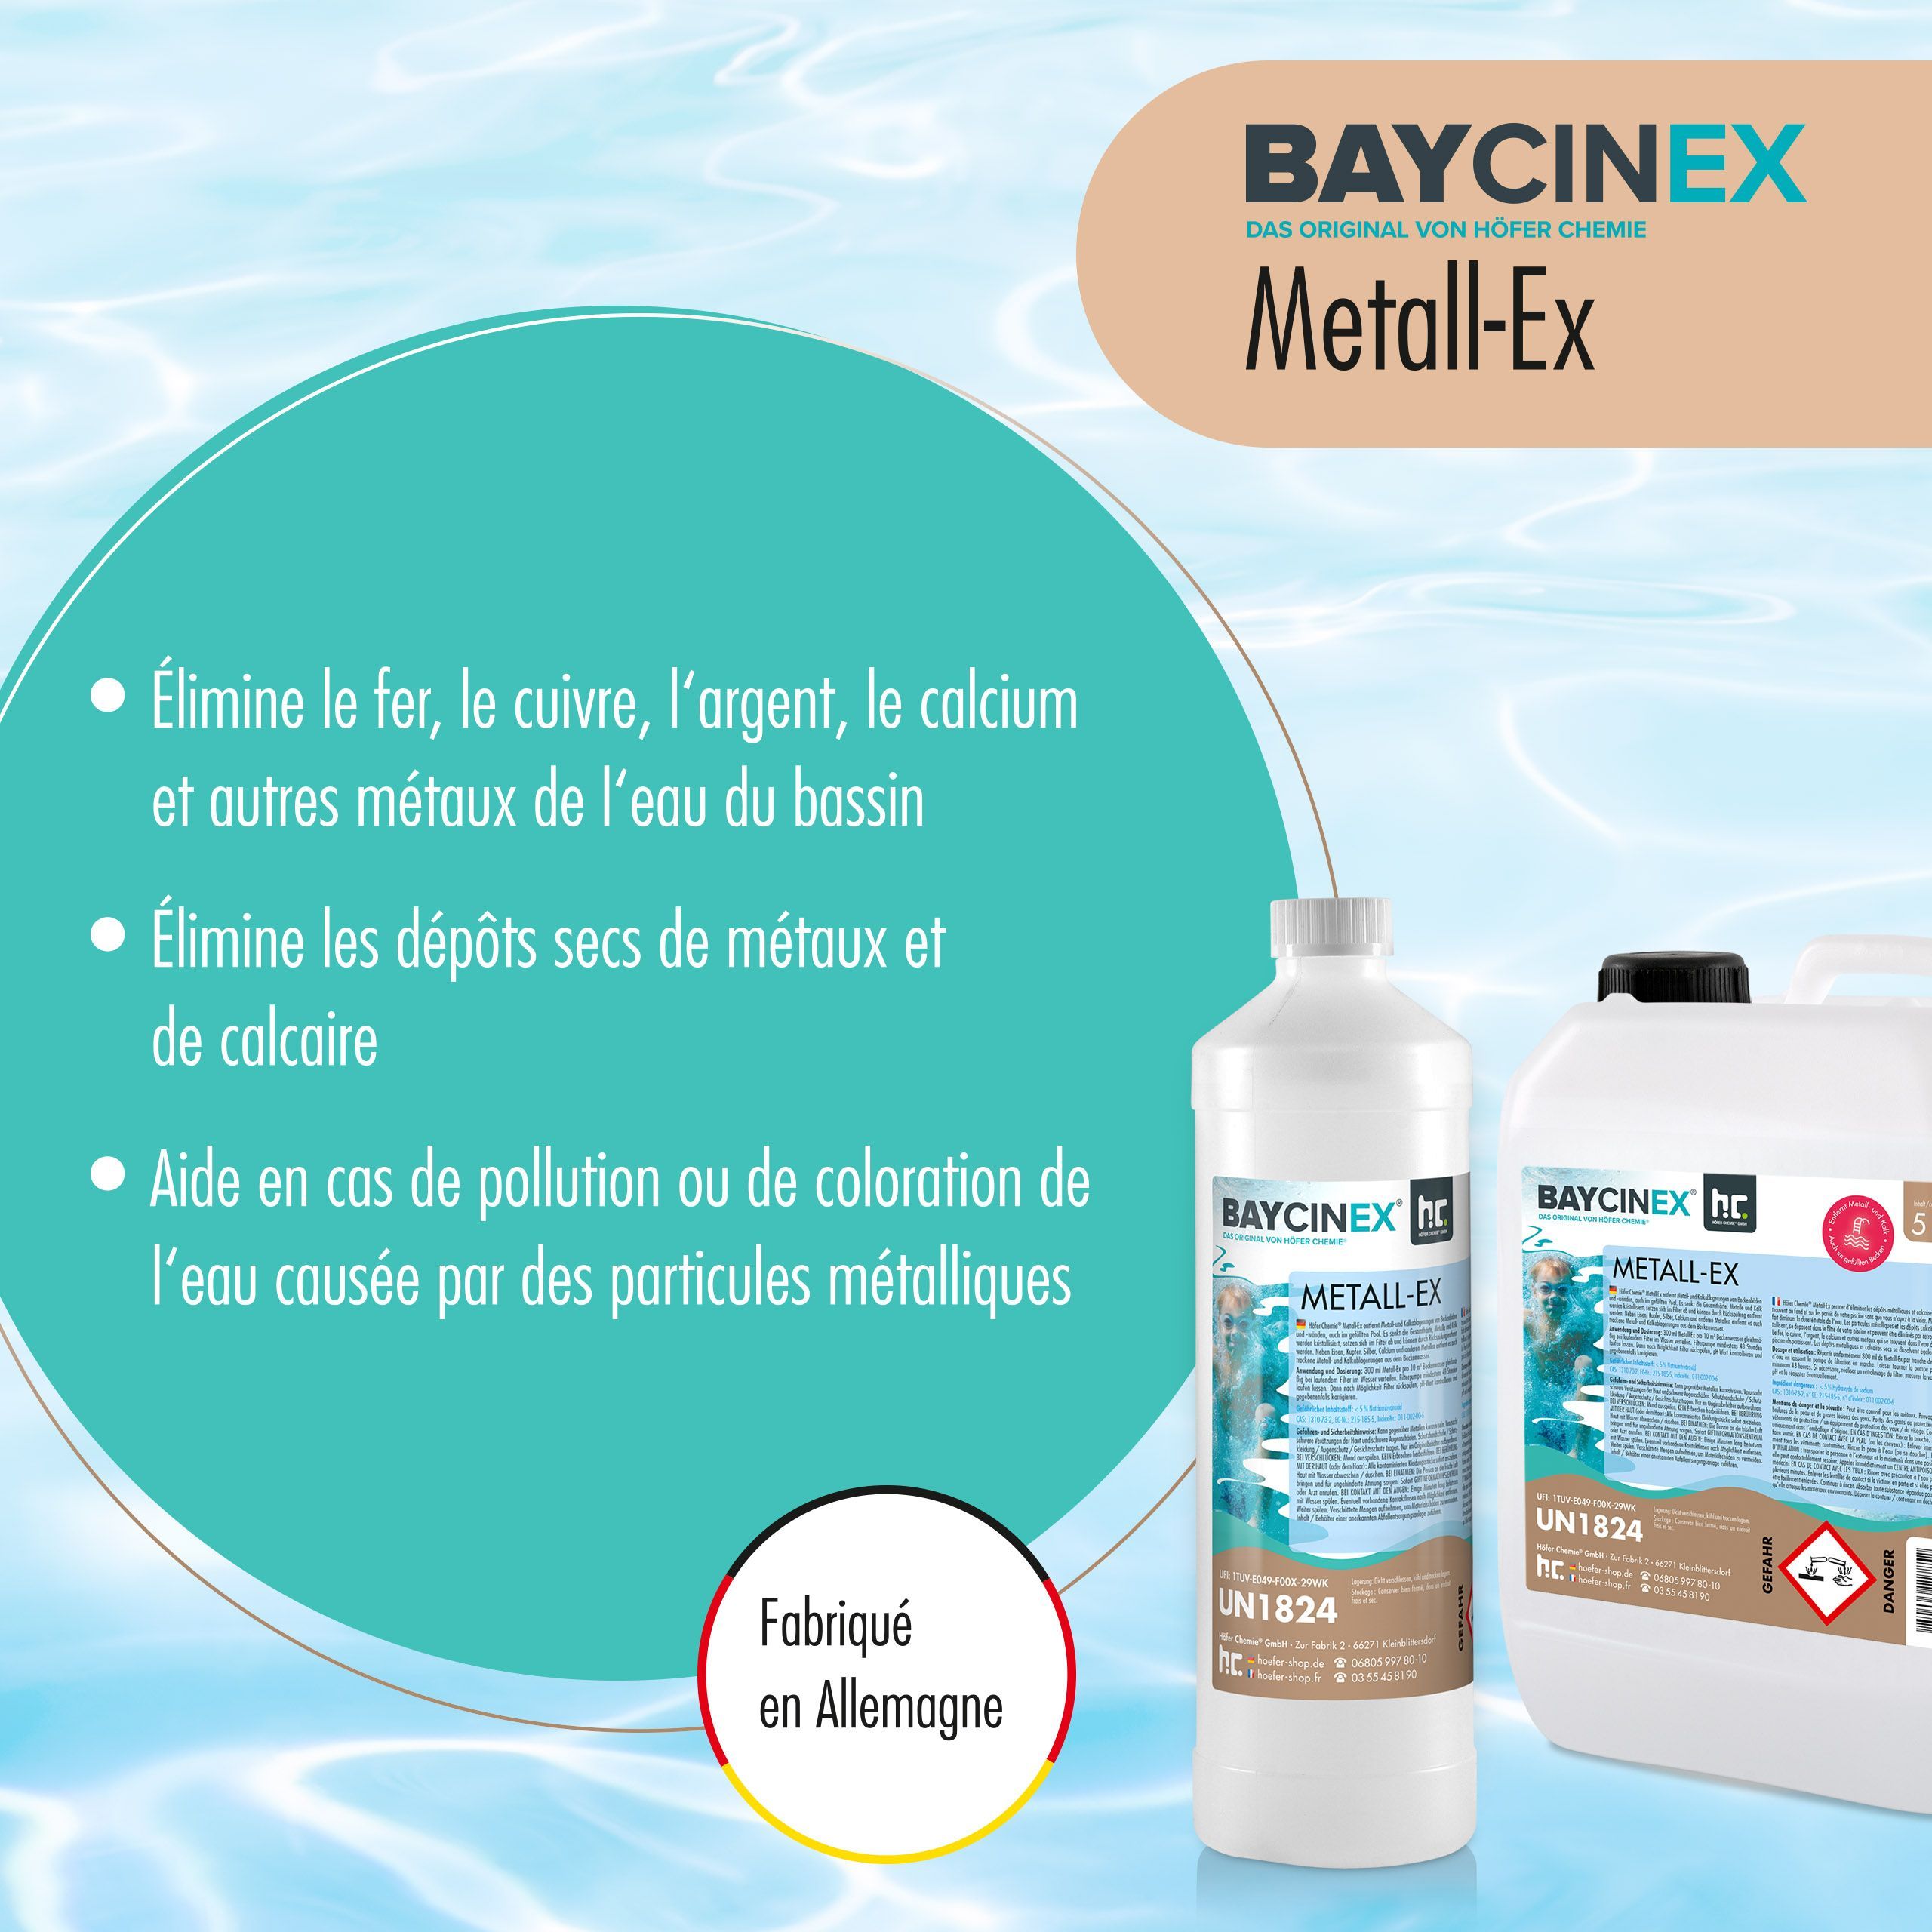 5 L BAYCINEX® Metall-Ex dans un bidon pratique